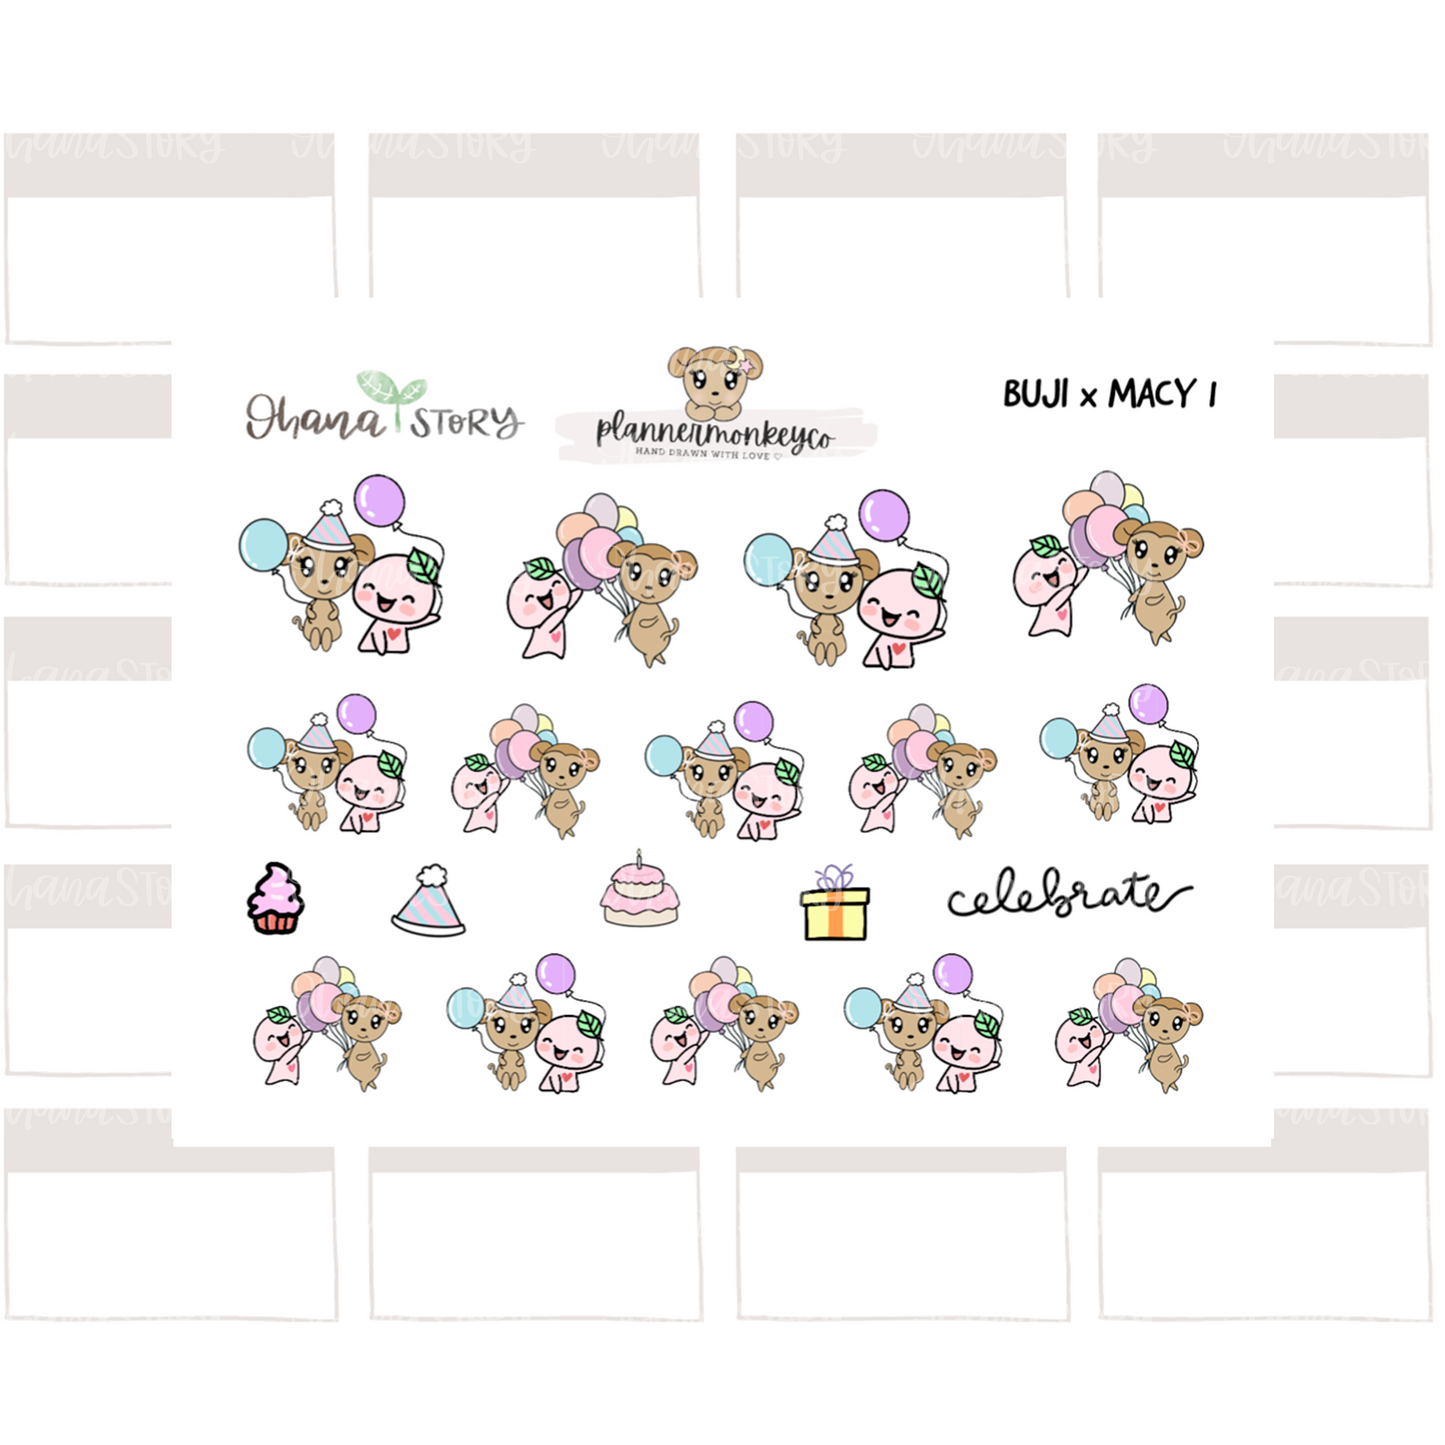 BUJI x MACY 1 | Collab Birthday Theme with PlannerMonkeyCo | Hand Drawn Planner Stickers